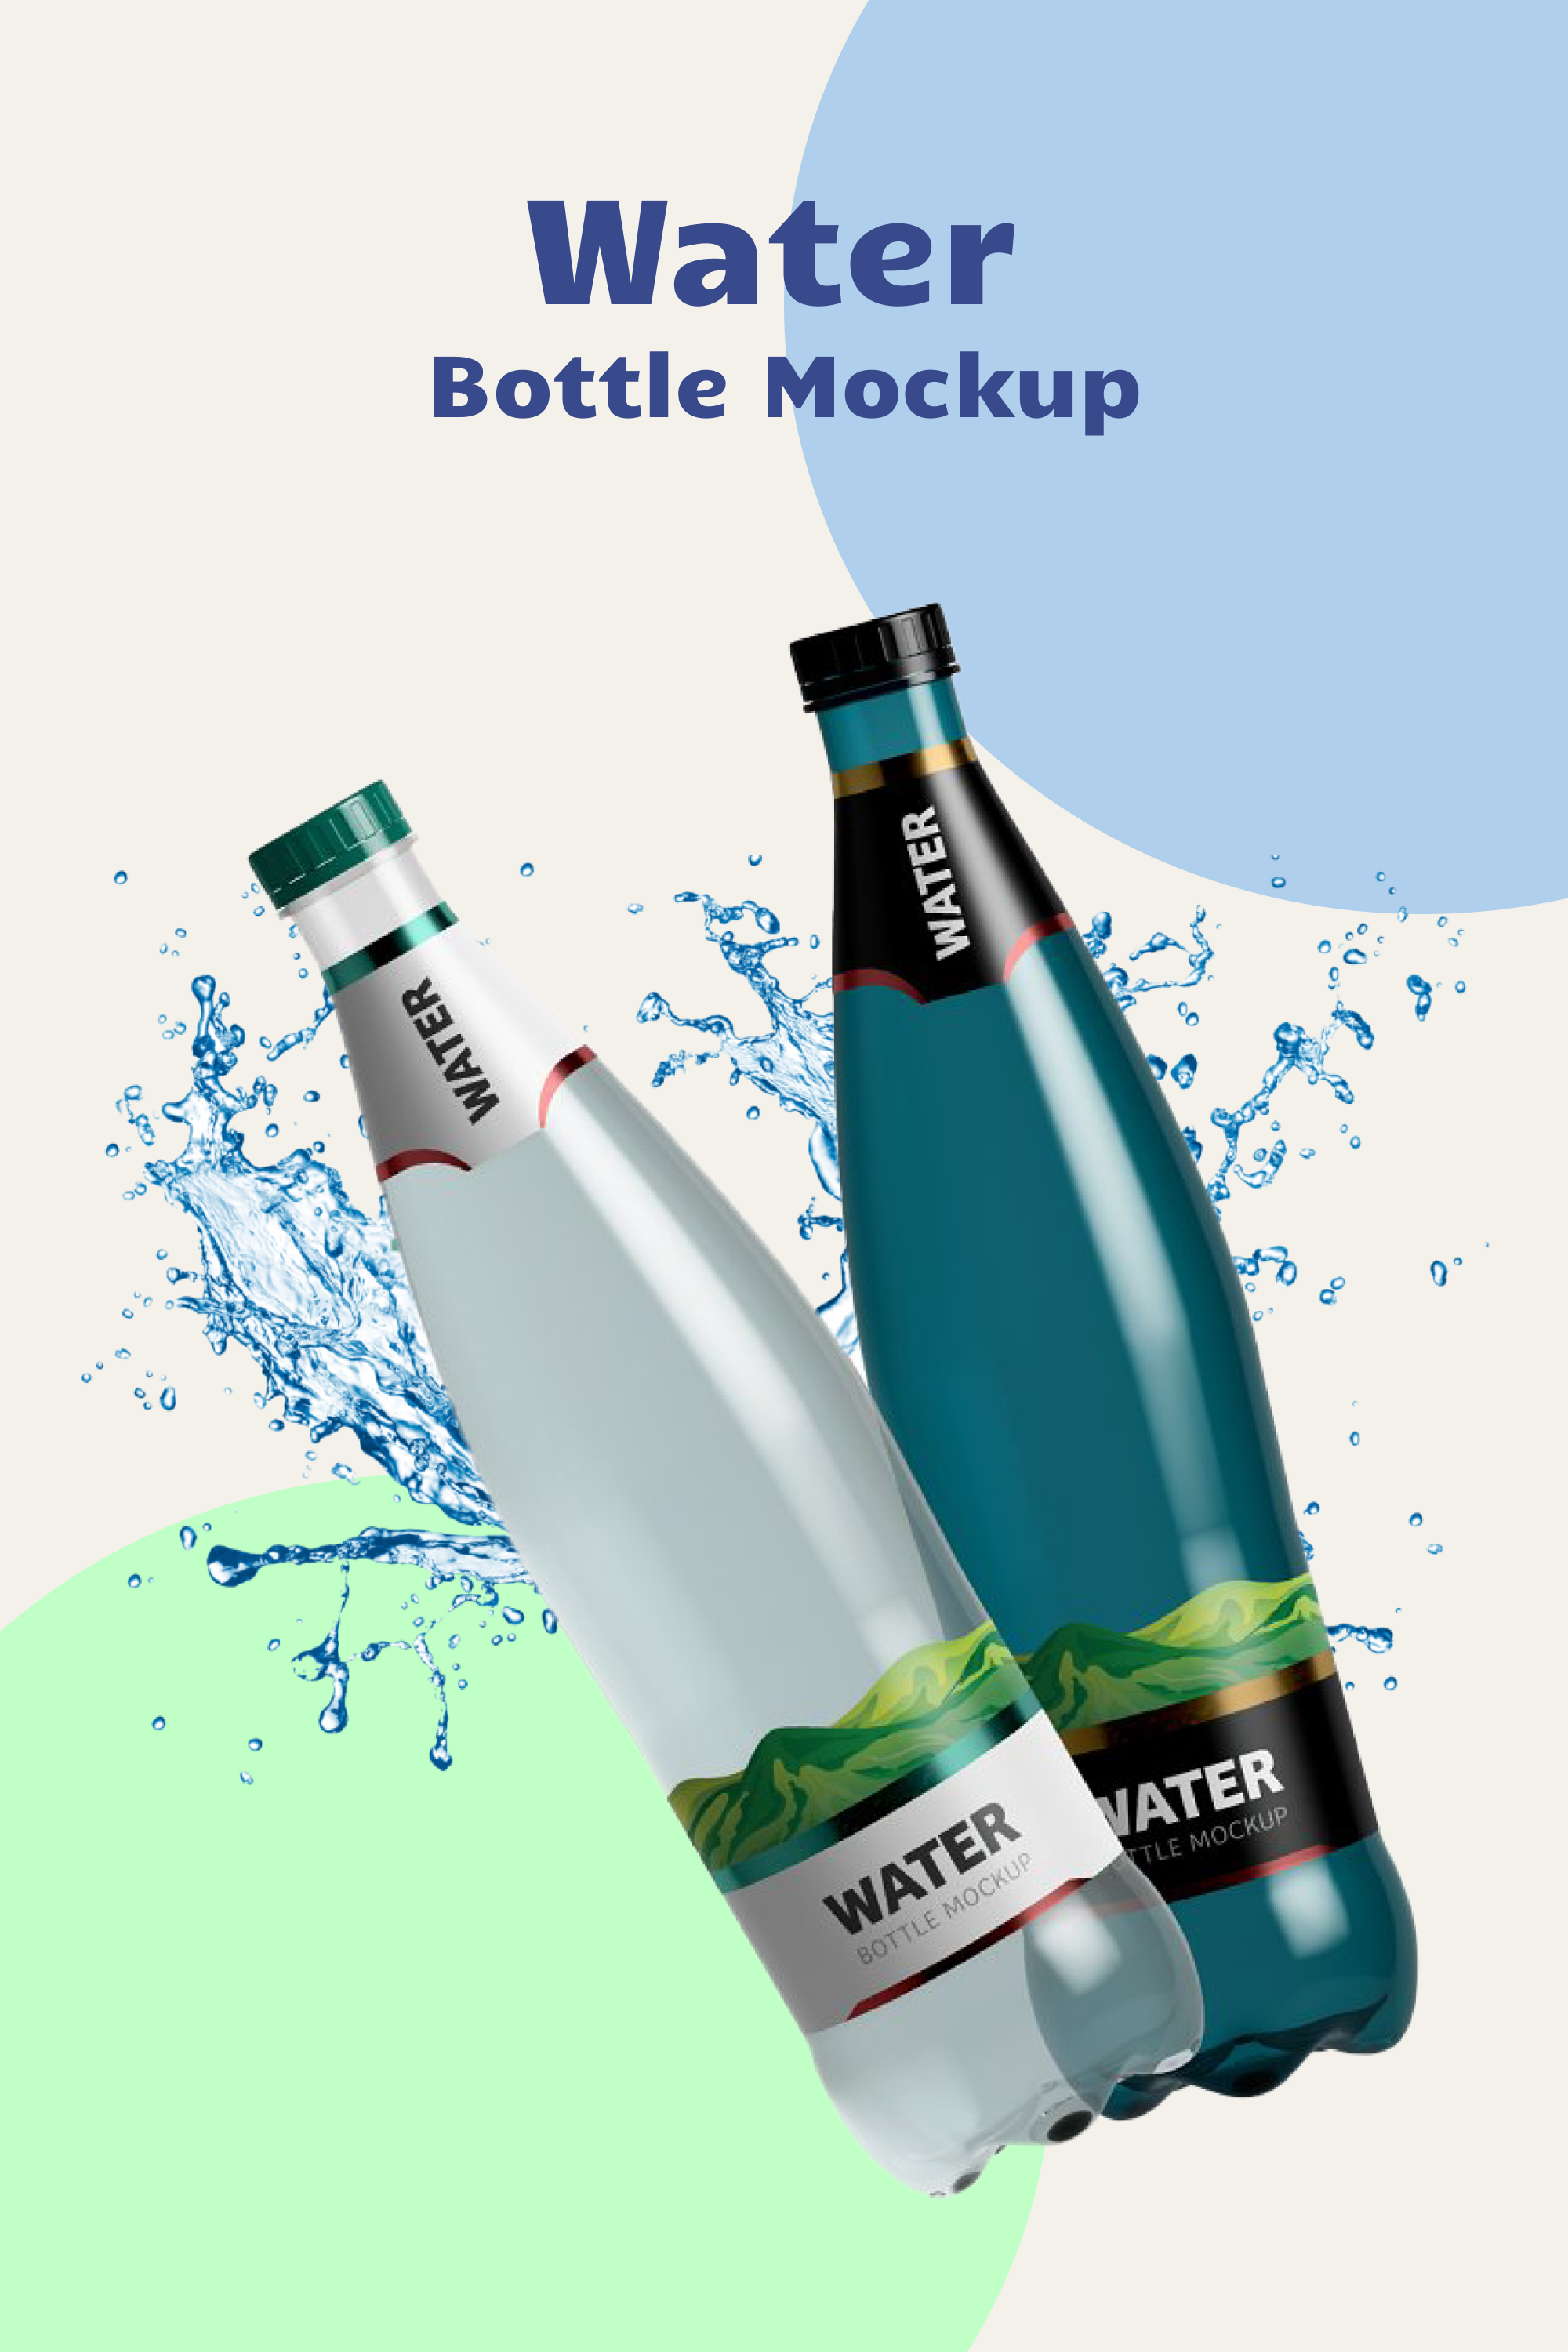 Water bottles can mockup of pinterest.